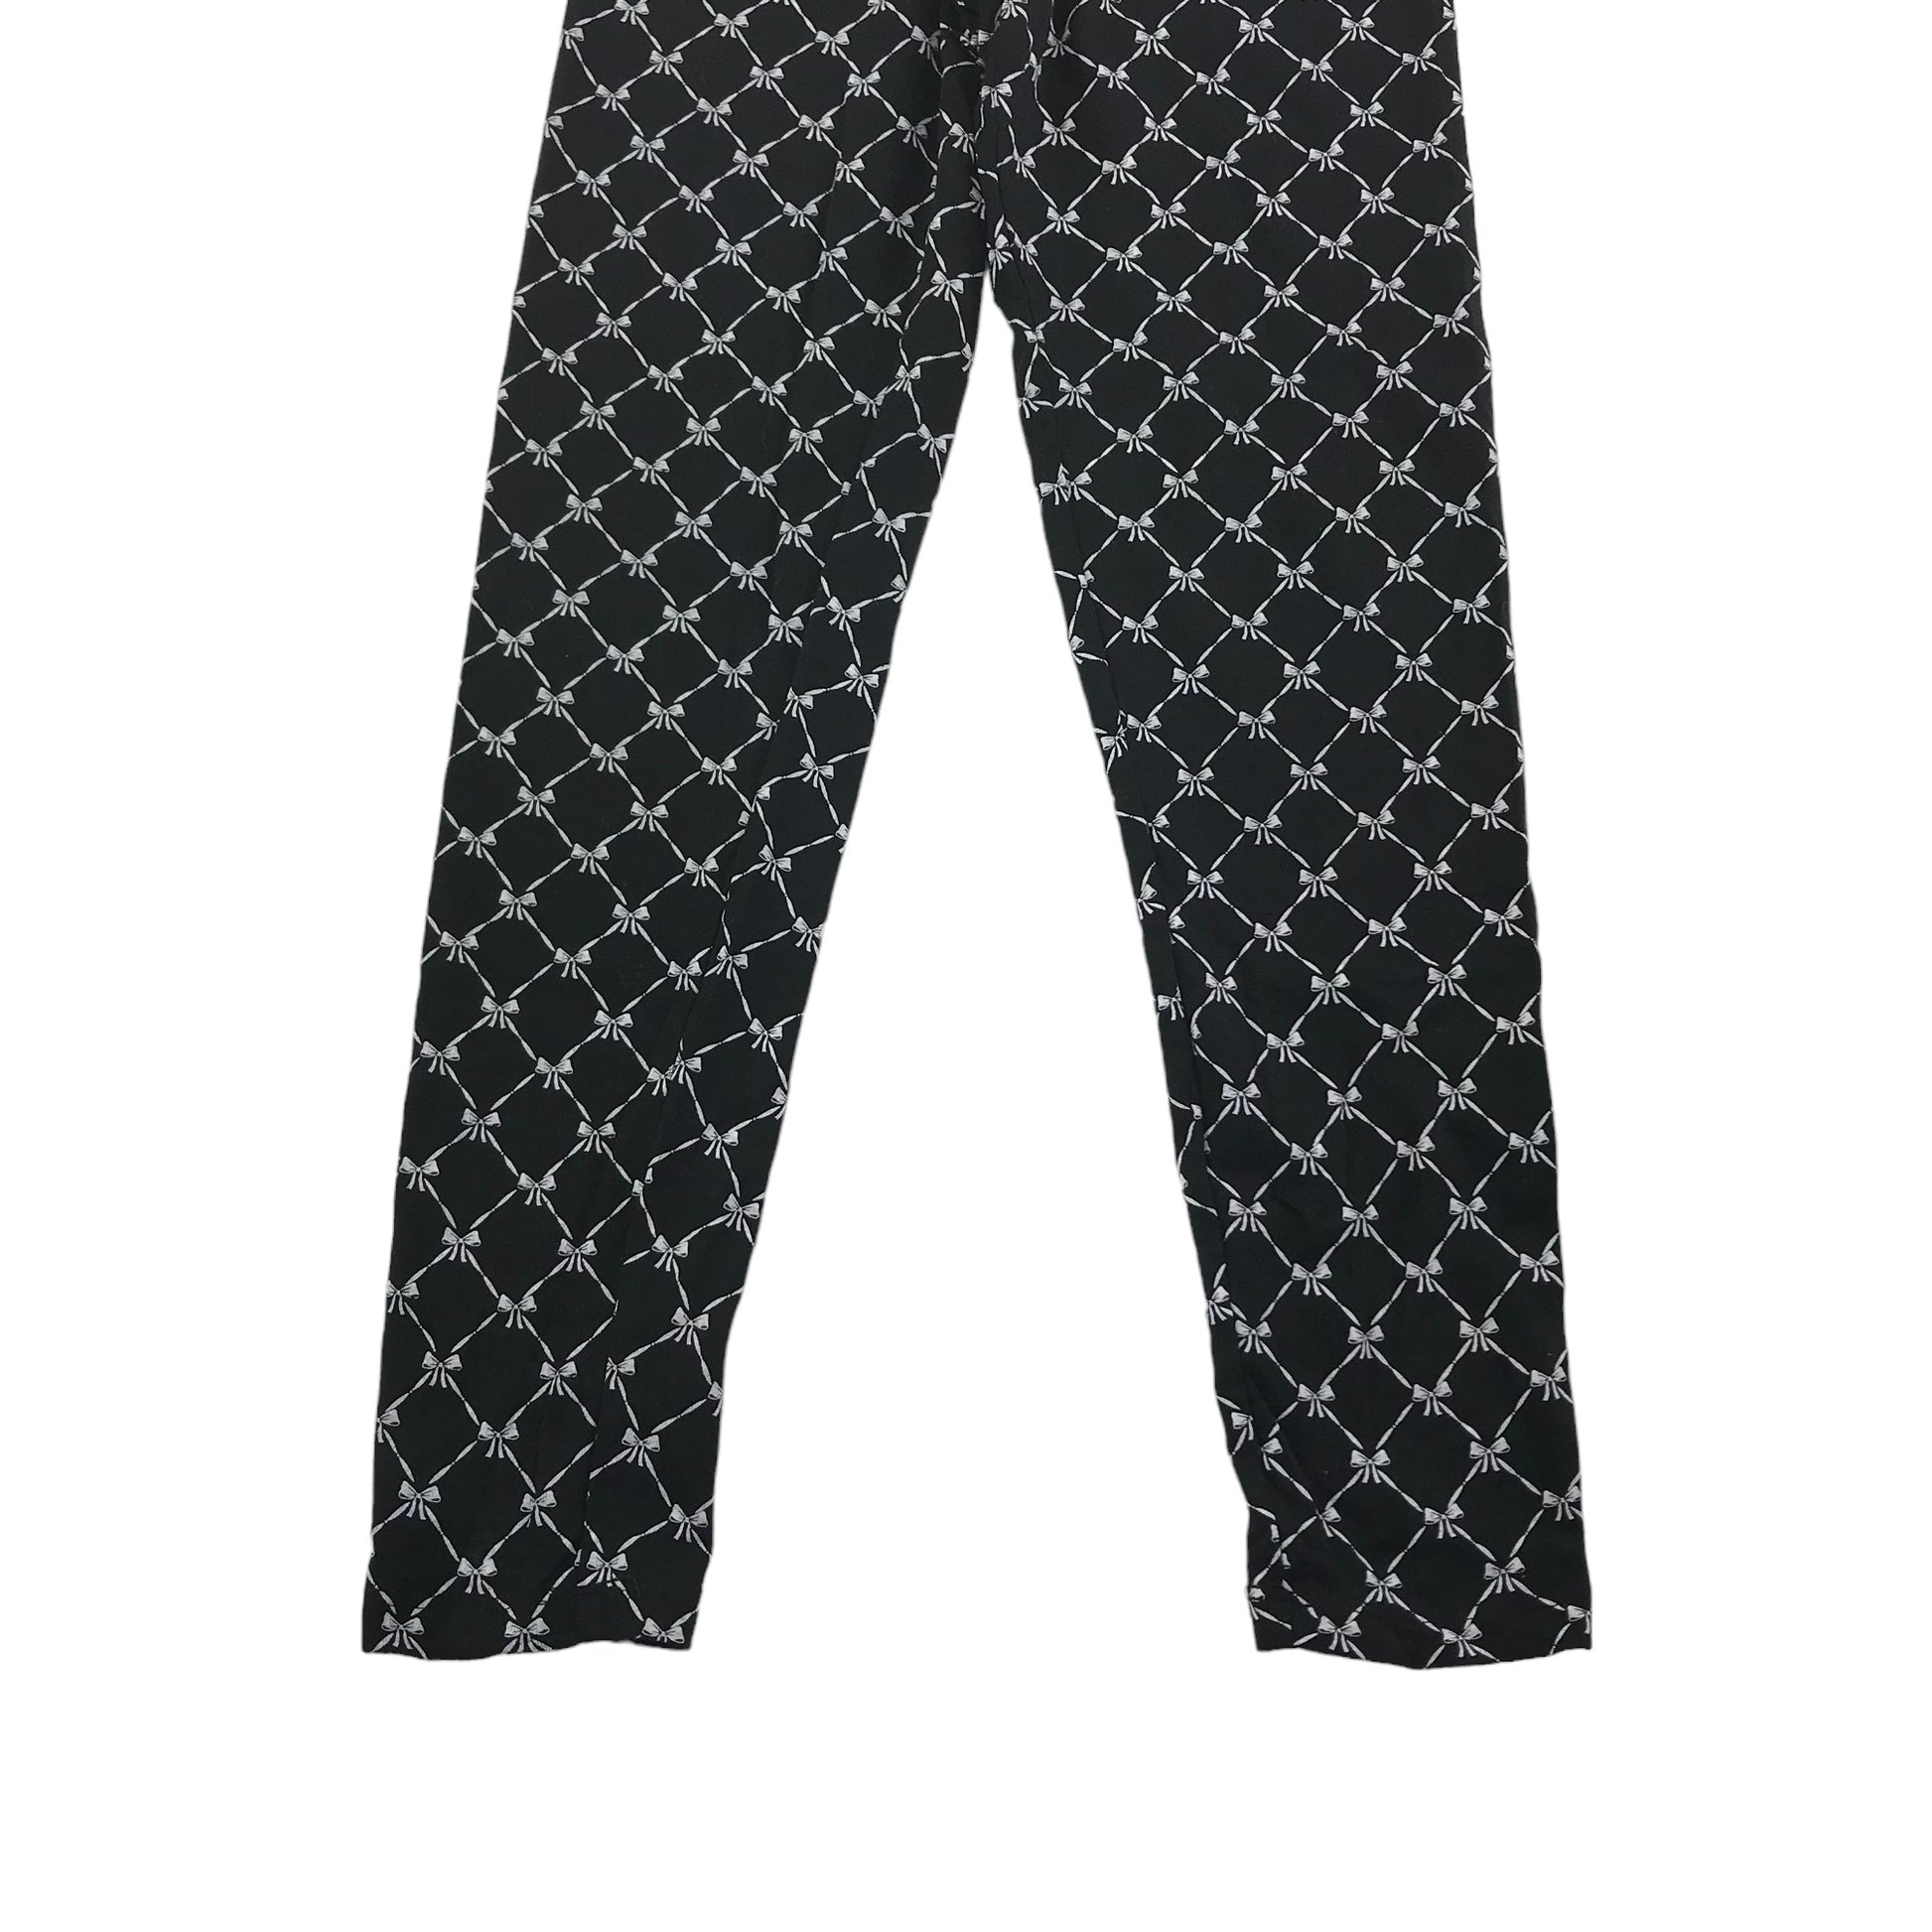 Matalan Leggings Age 10 Black Bow Tie Fishnet Print Pattern